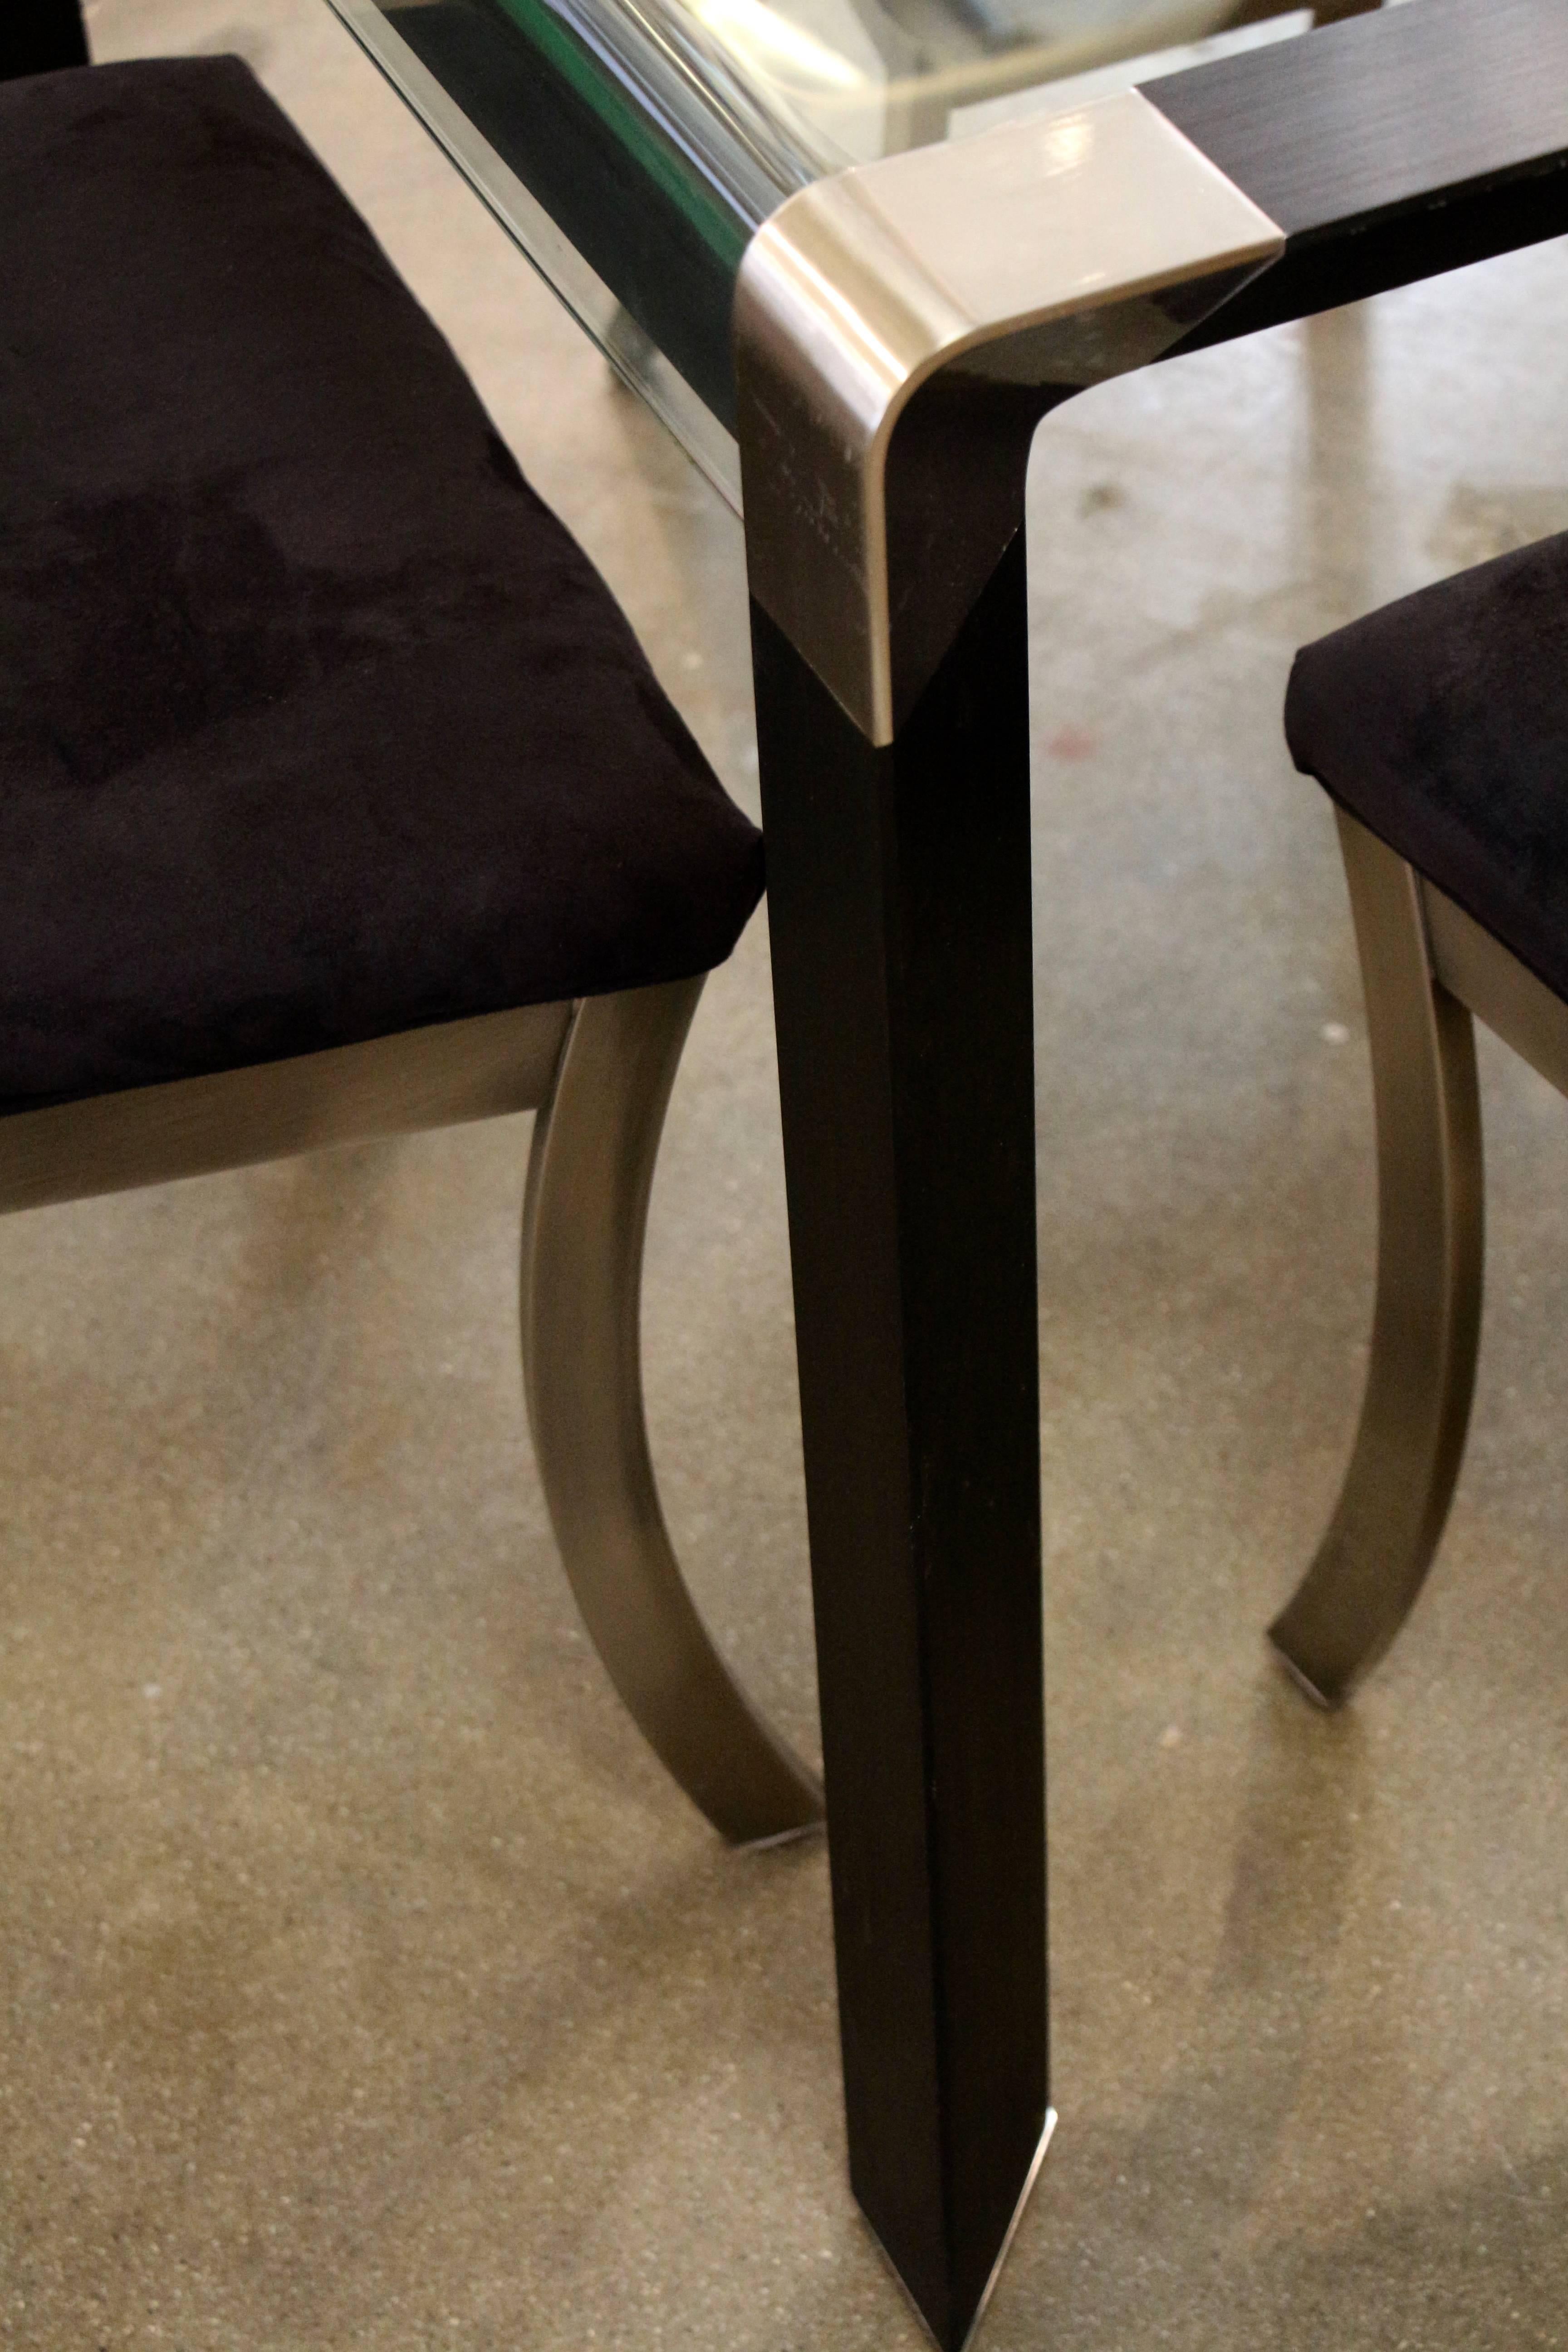 Modern DIA Design Institute of America Steel Klismos Chairs Dining Table